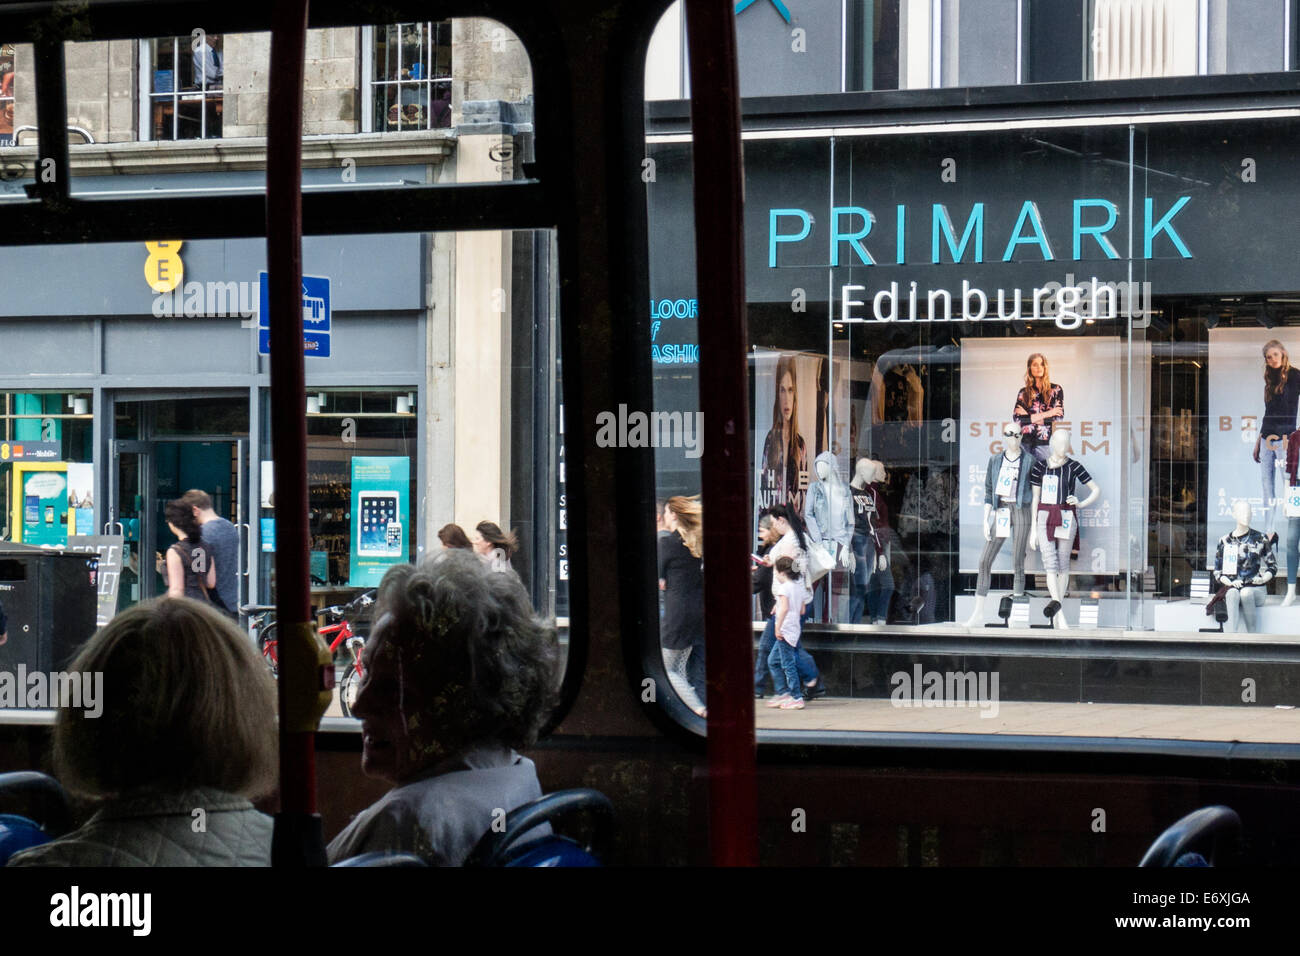 Primark clothing store viewed through a bus on Princes Street, Edinburgh Stock Photo